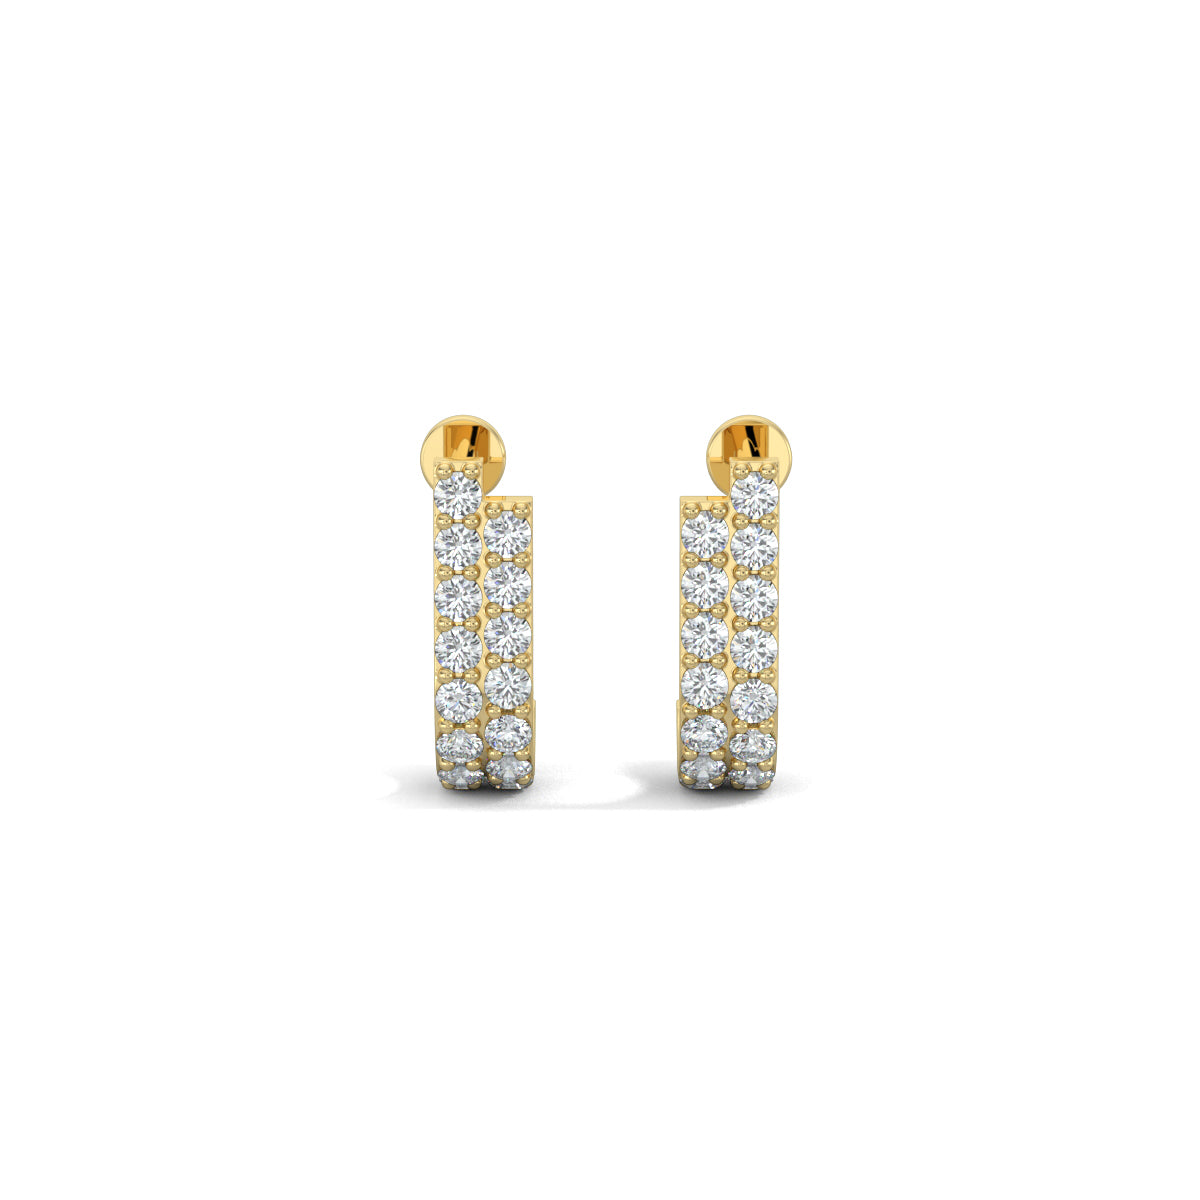 Yellow Gold, Diamond Earrings, LunaDazzle Earrings, Half-bali diamond earrings, Natural Diamonds, Lab-grown diamonds, Pave diamond earrings, Luxury diamond jewelry, Contemporary diamond earrings